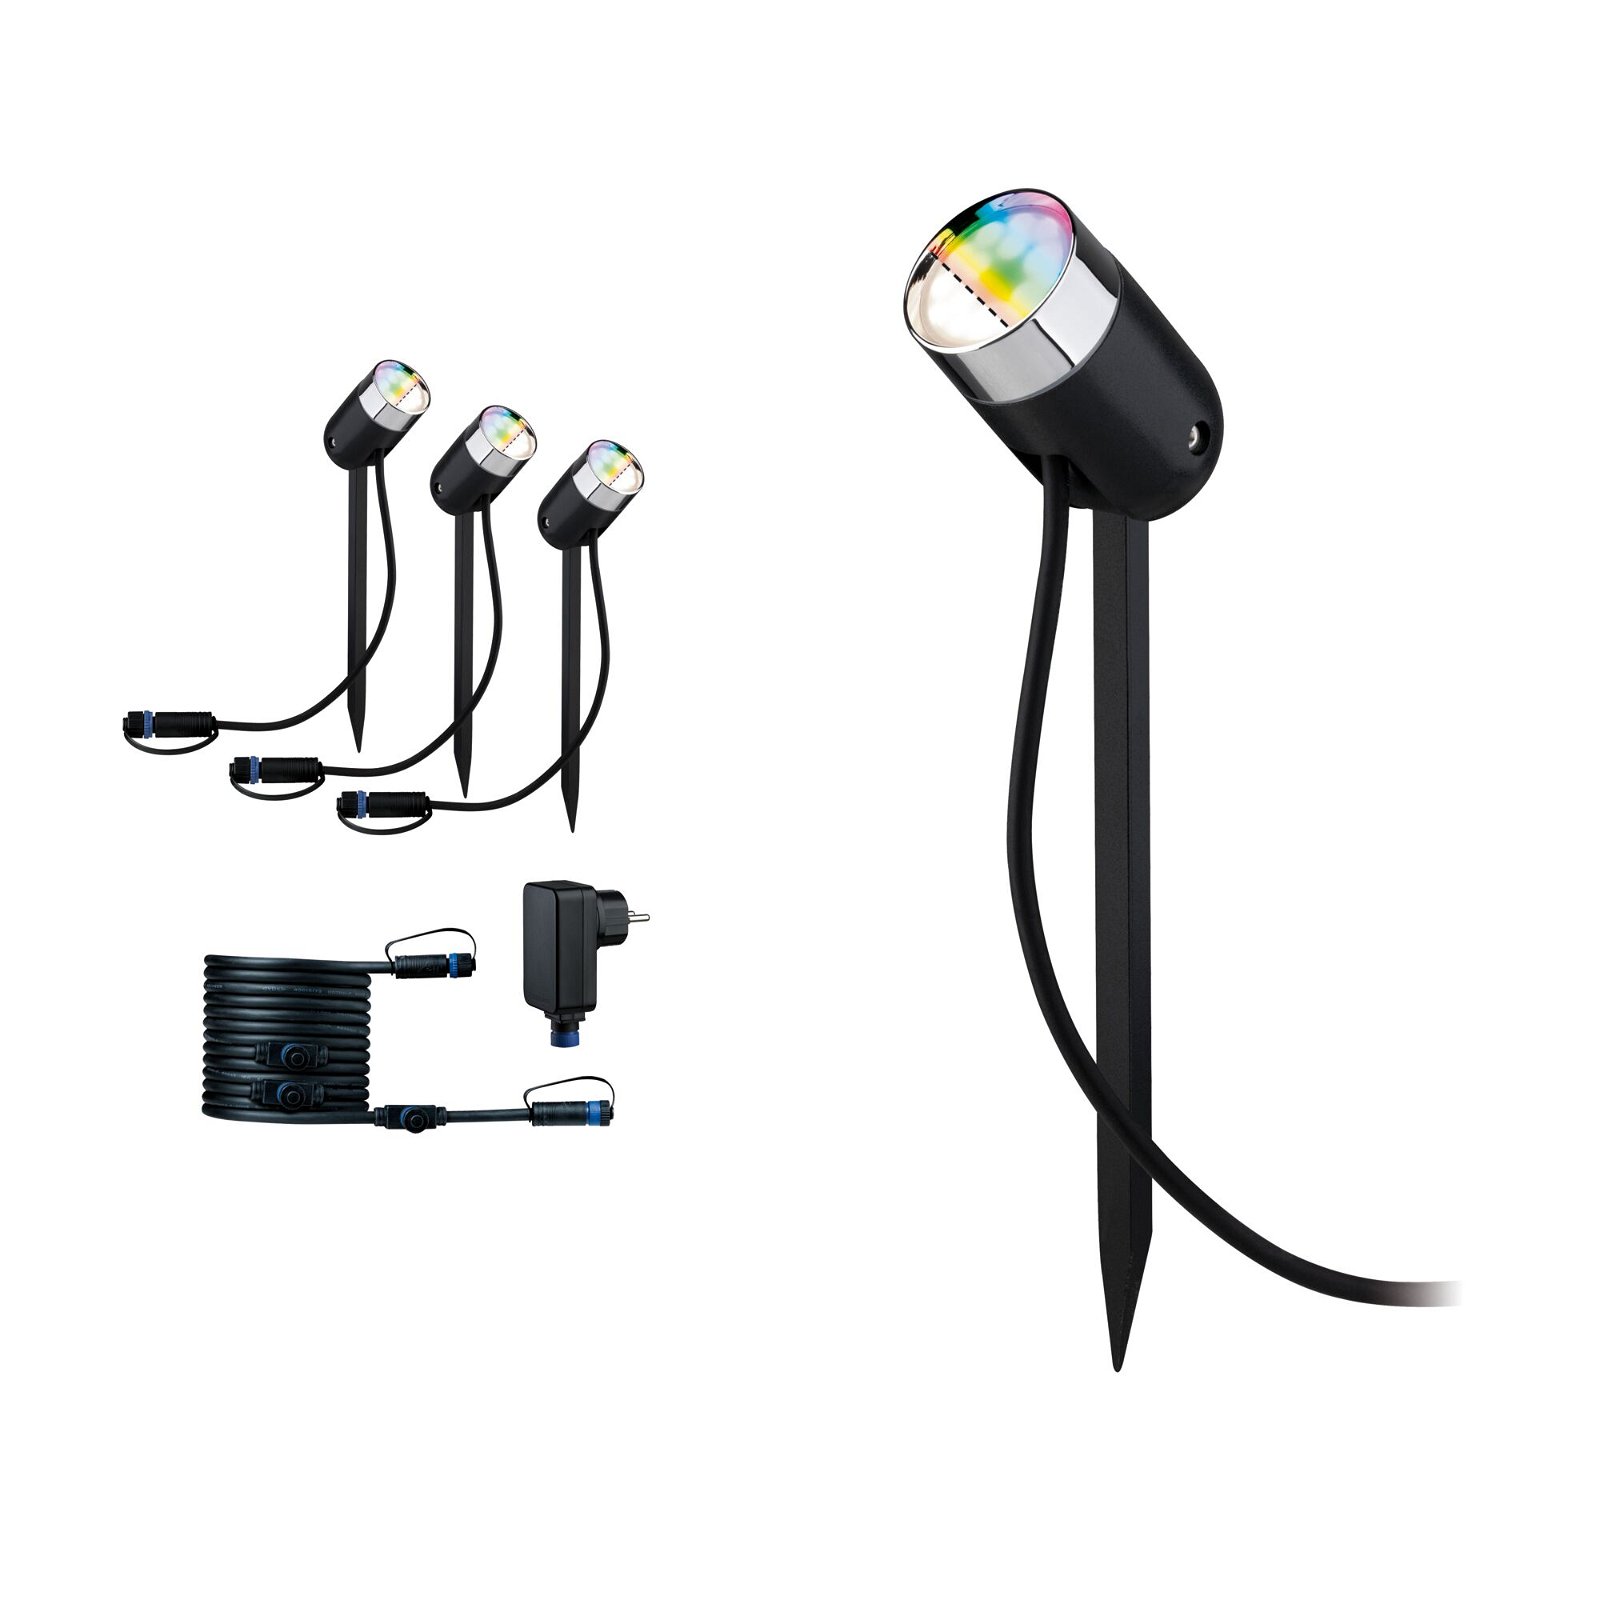 Plug & Shine Startsets met prijsvoordeel Smart Home smik Gateway + LED Tuinspot Snoek Basisset RGBW+